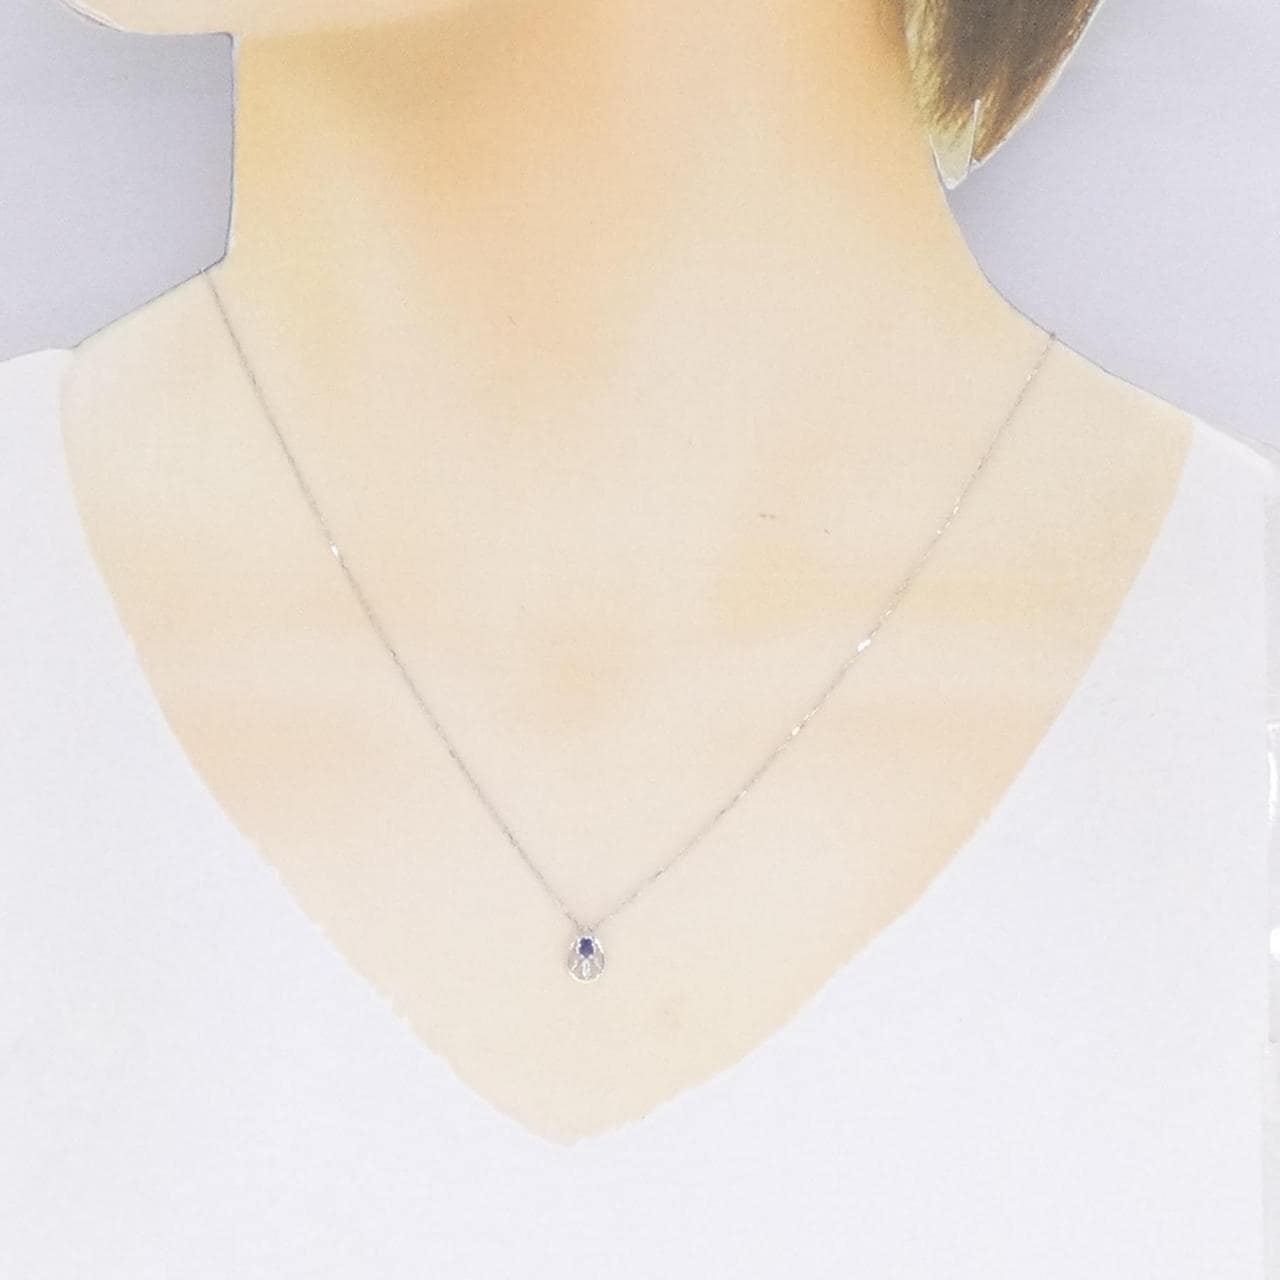 K10WG sapphire necklace